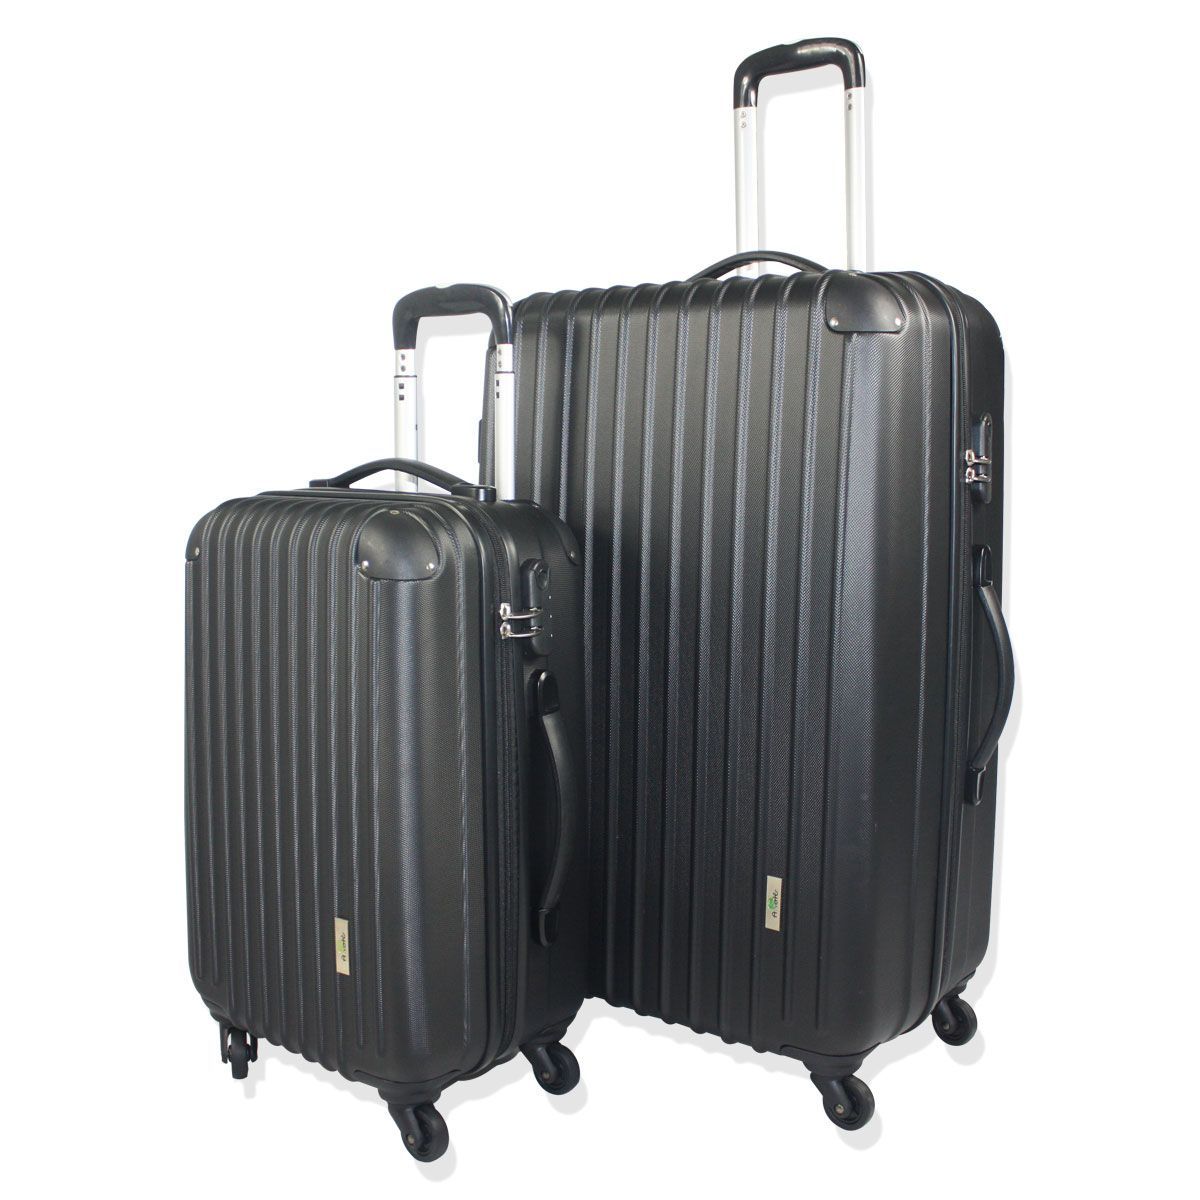 2pc Hard- Shell Luggage Trolley Set - Black